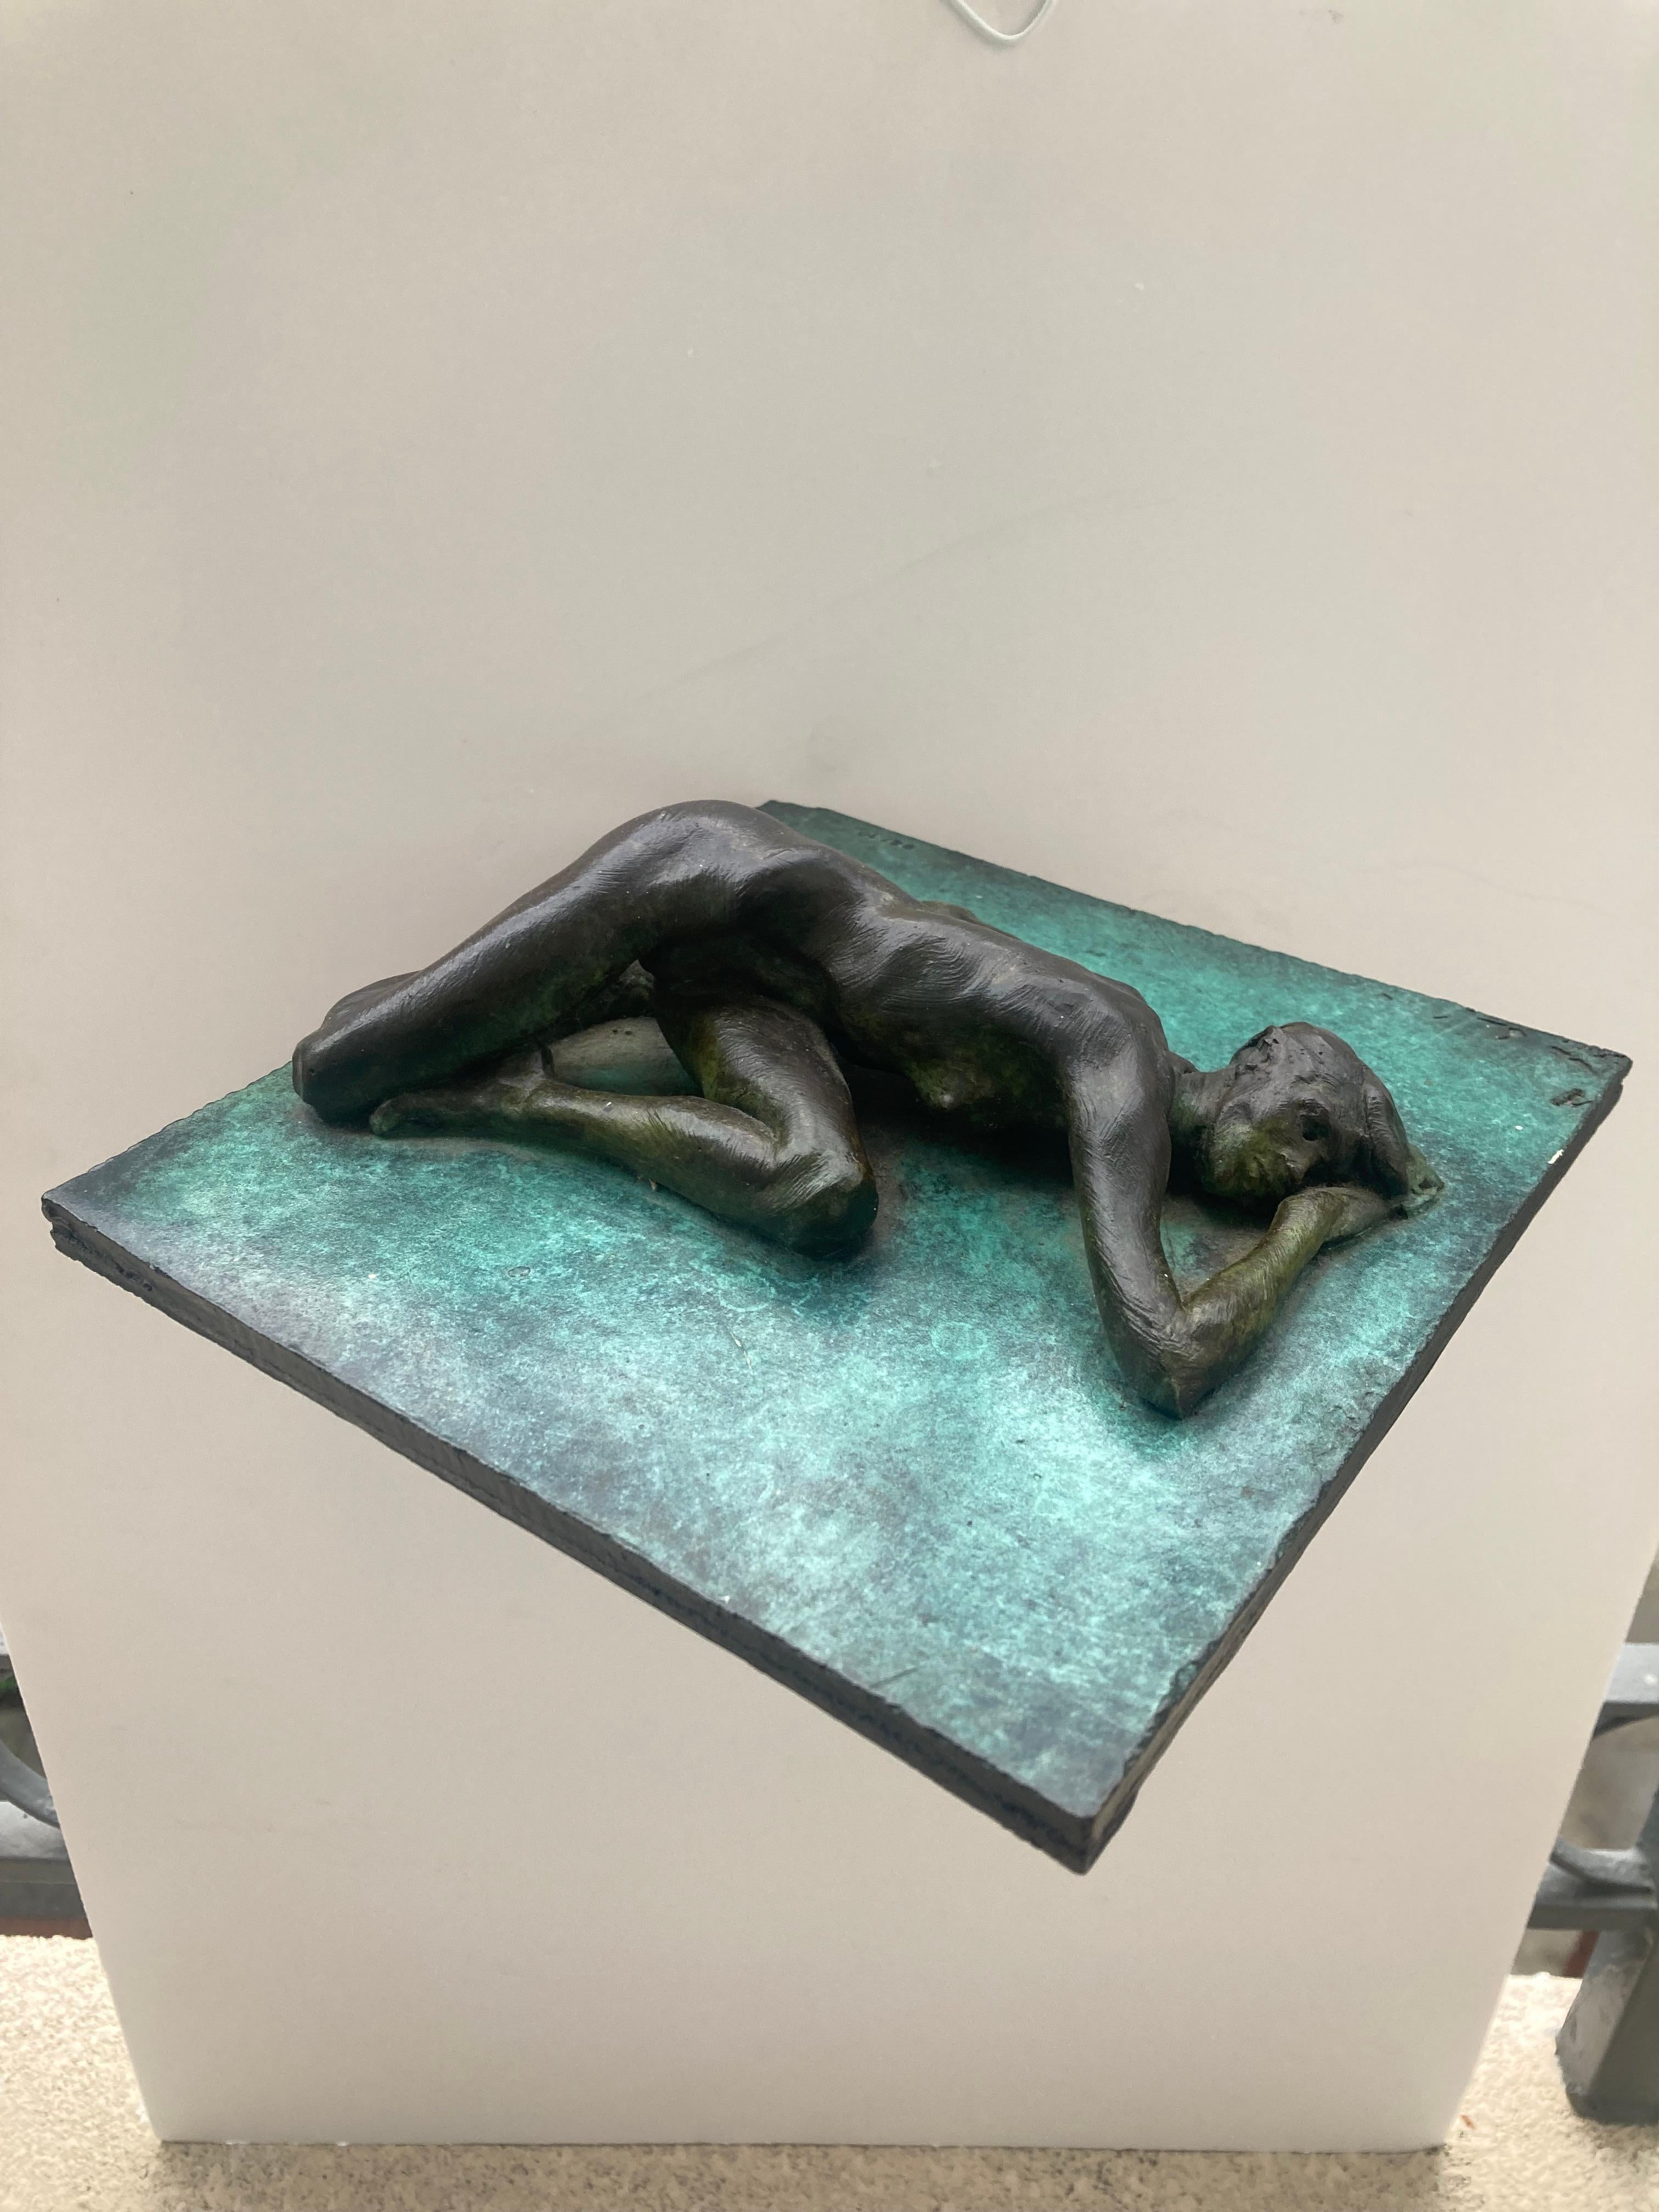 Sculpture de nu en bronze de Robert Graham, / mur/table TitreJennifer4/10,1996.RG Bon état - En vente à Los Angeles, CA